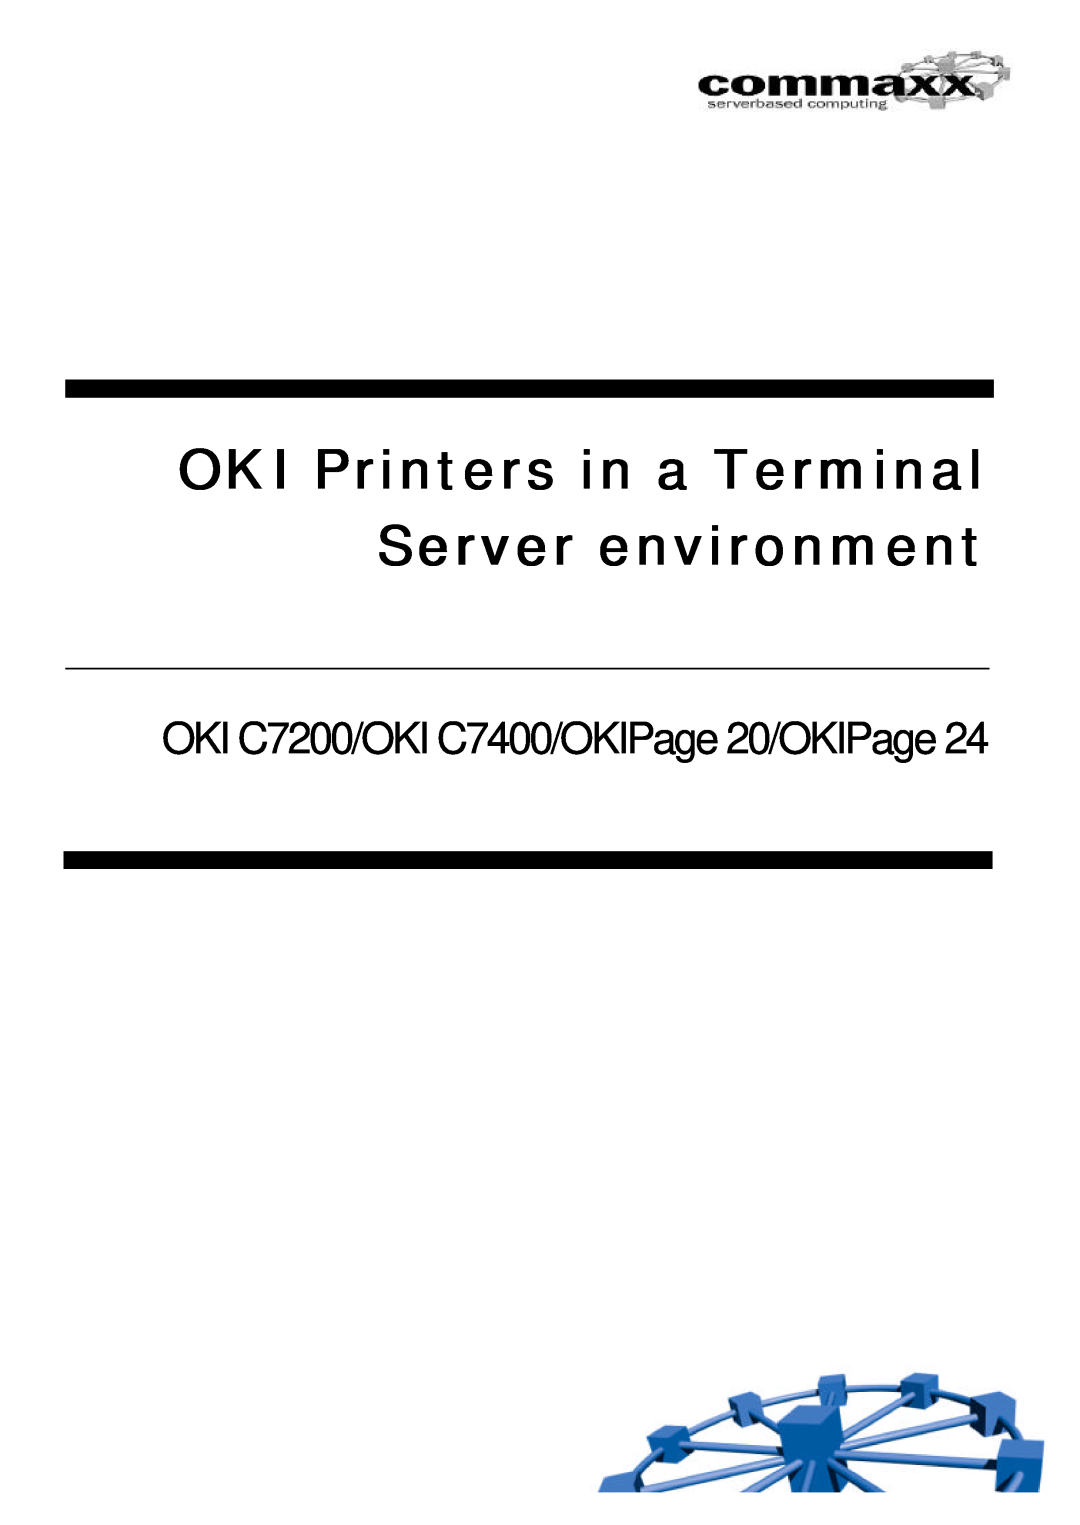 Oki manual OKI Printers in a Terminal Server environment, OKI C7200/OKI C7400/OKIPage 20/OKIPage 